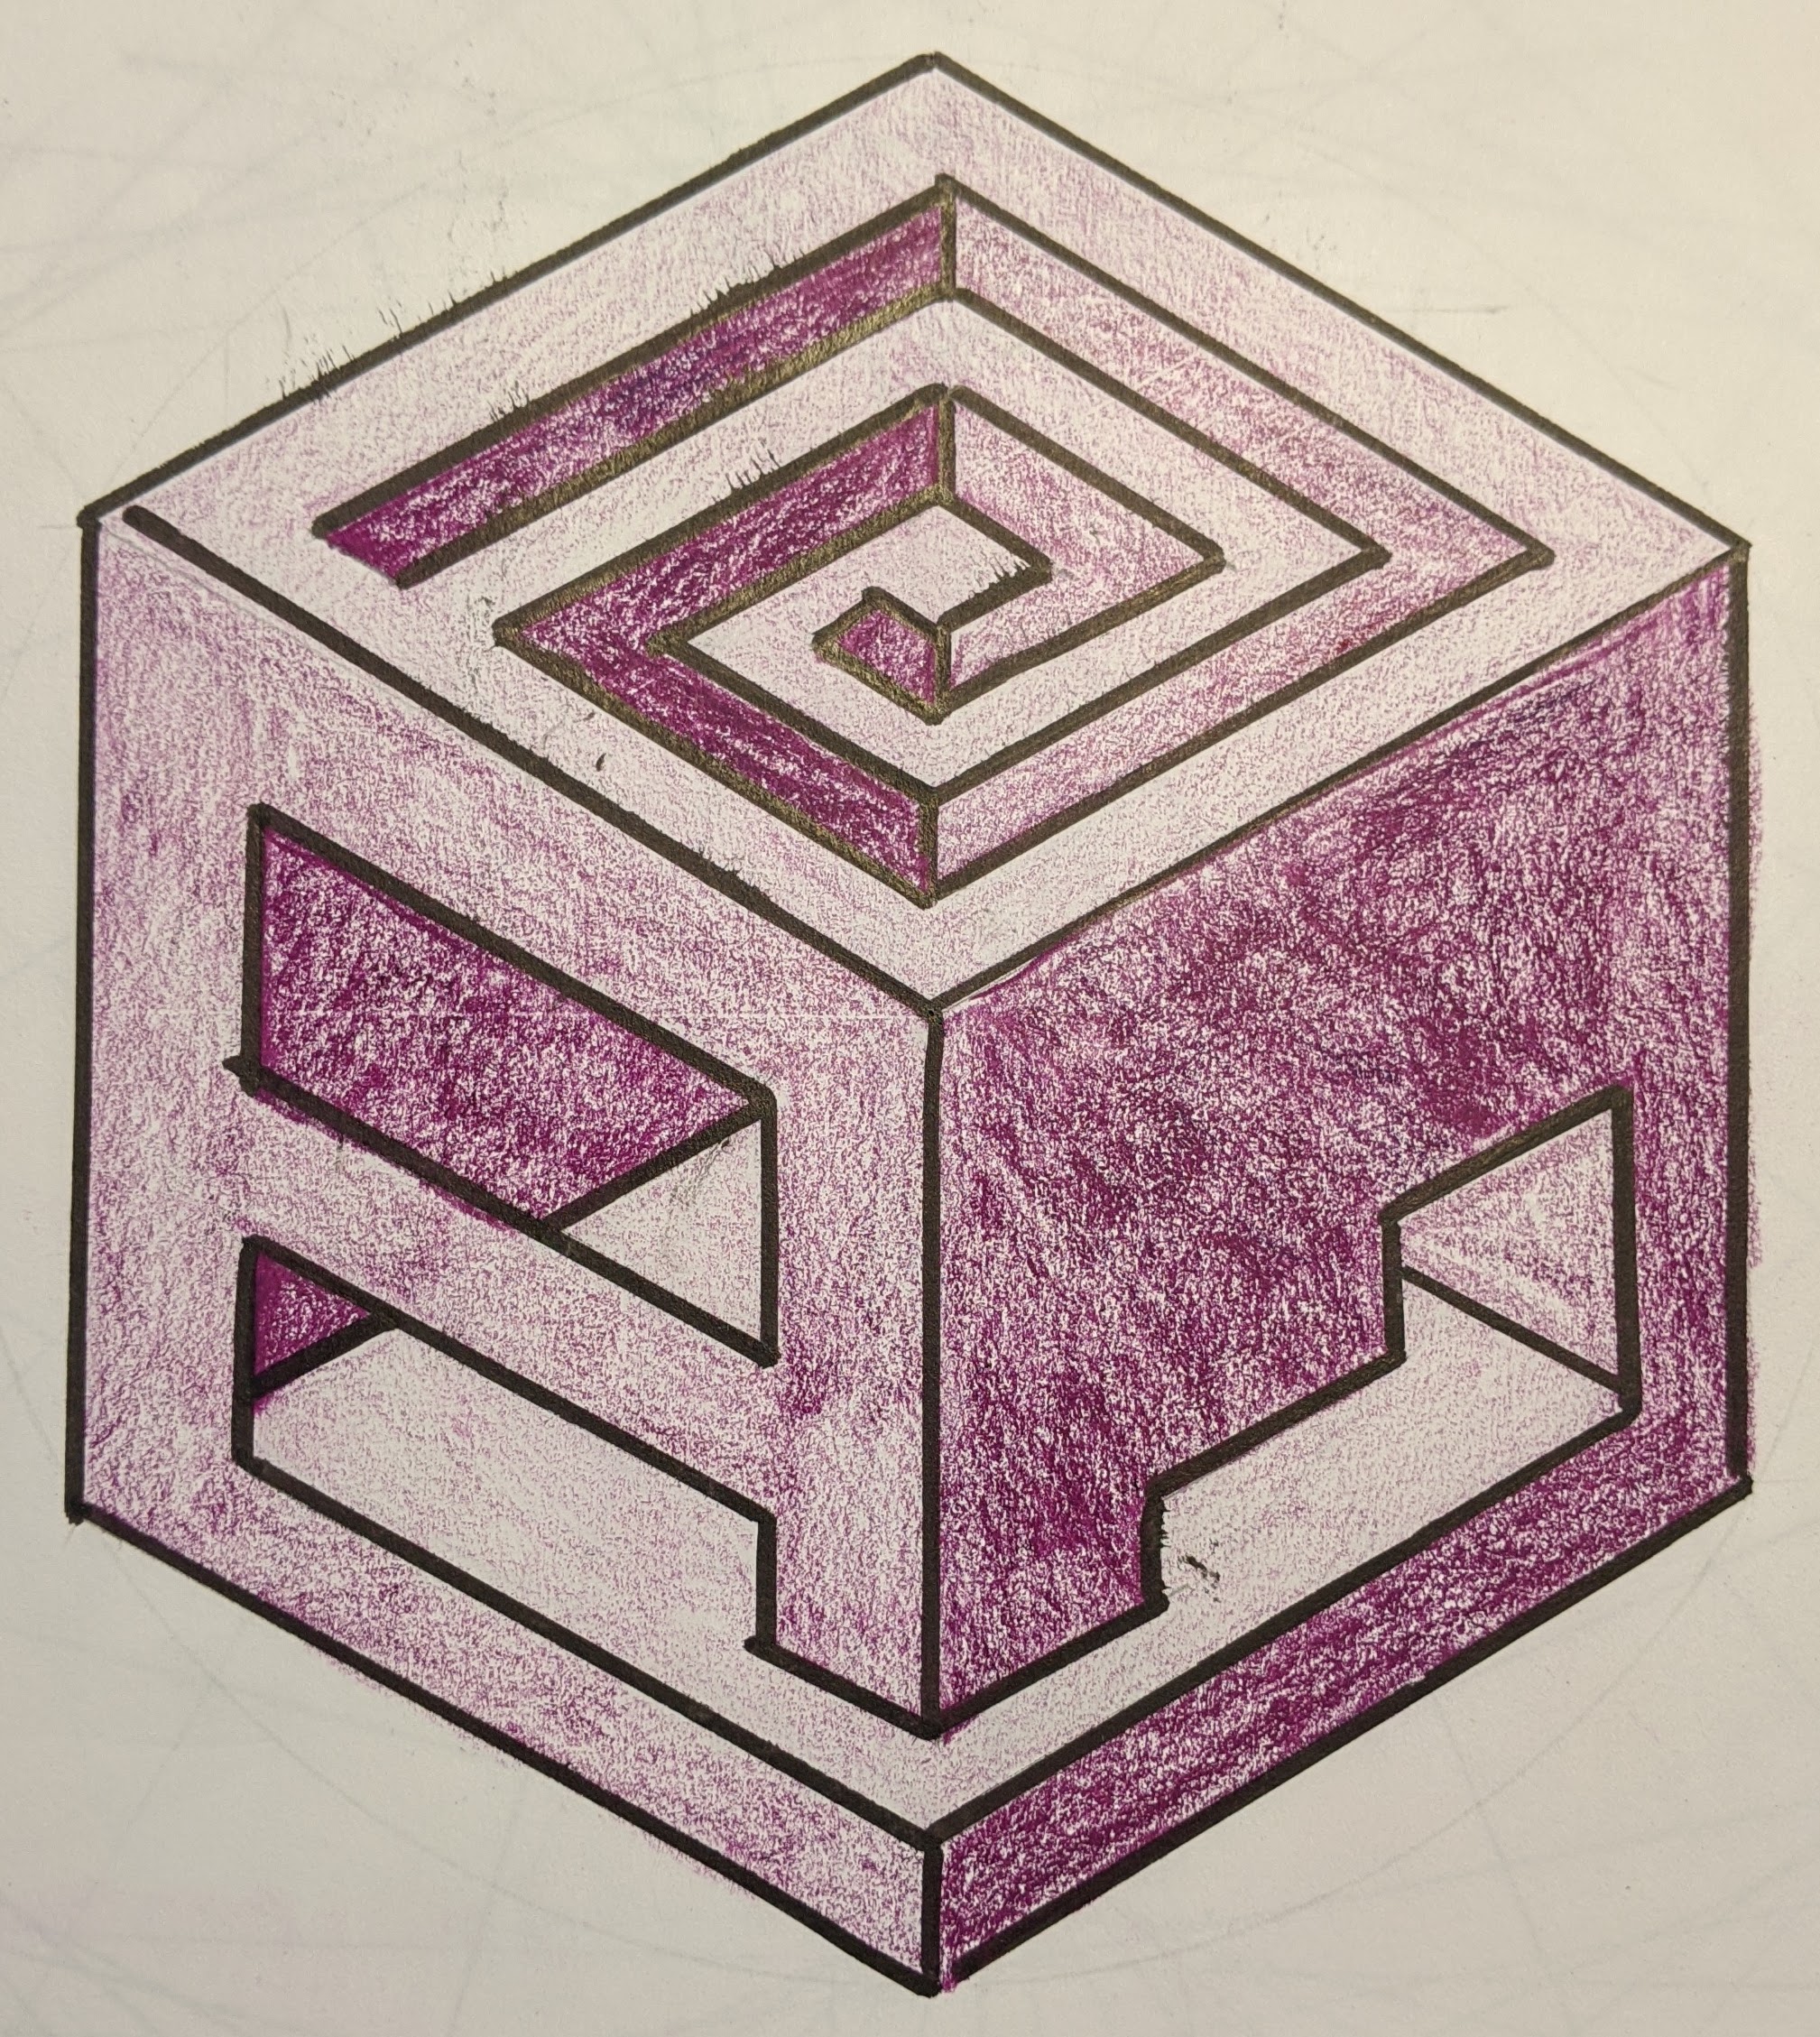 3. Isometric Cube Cutouts